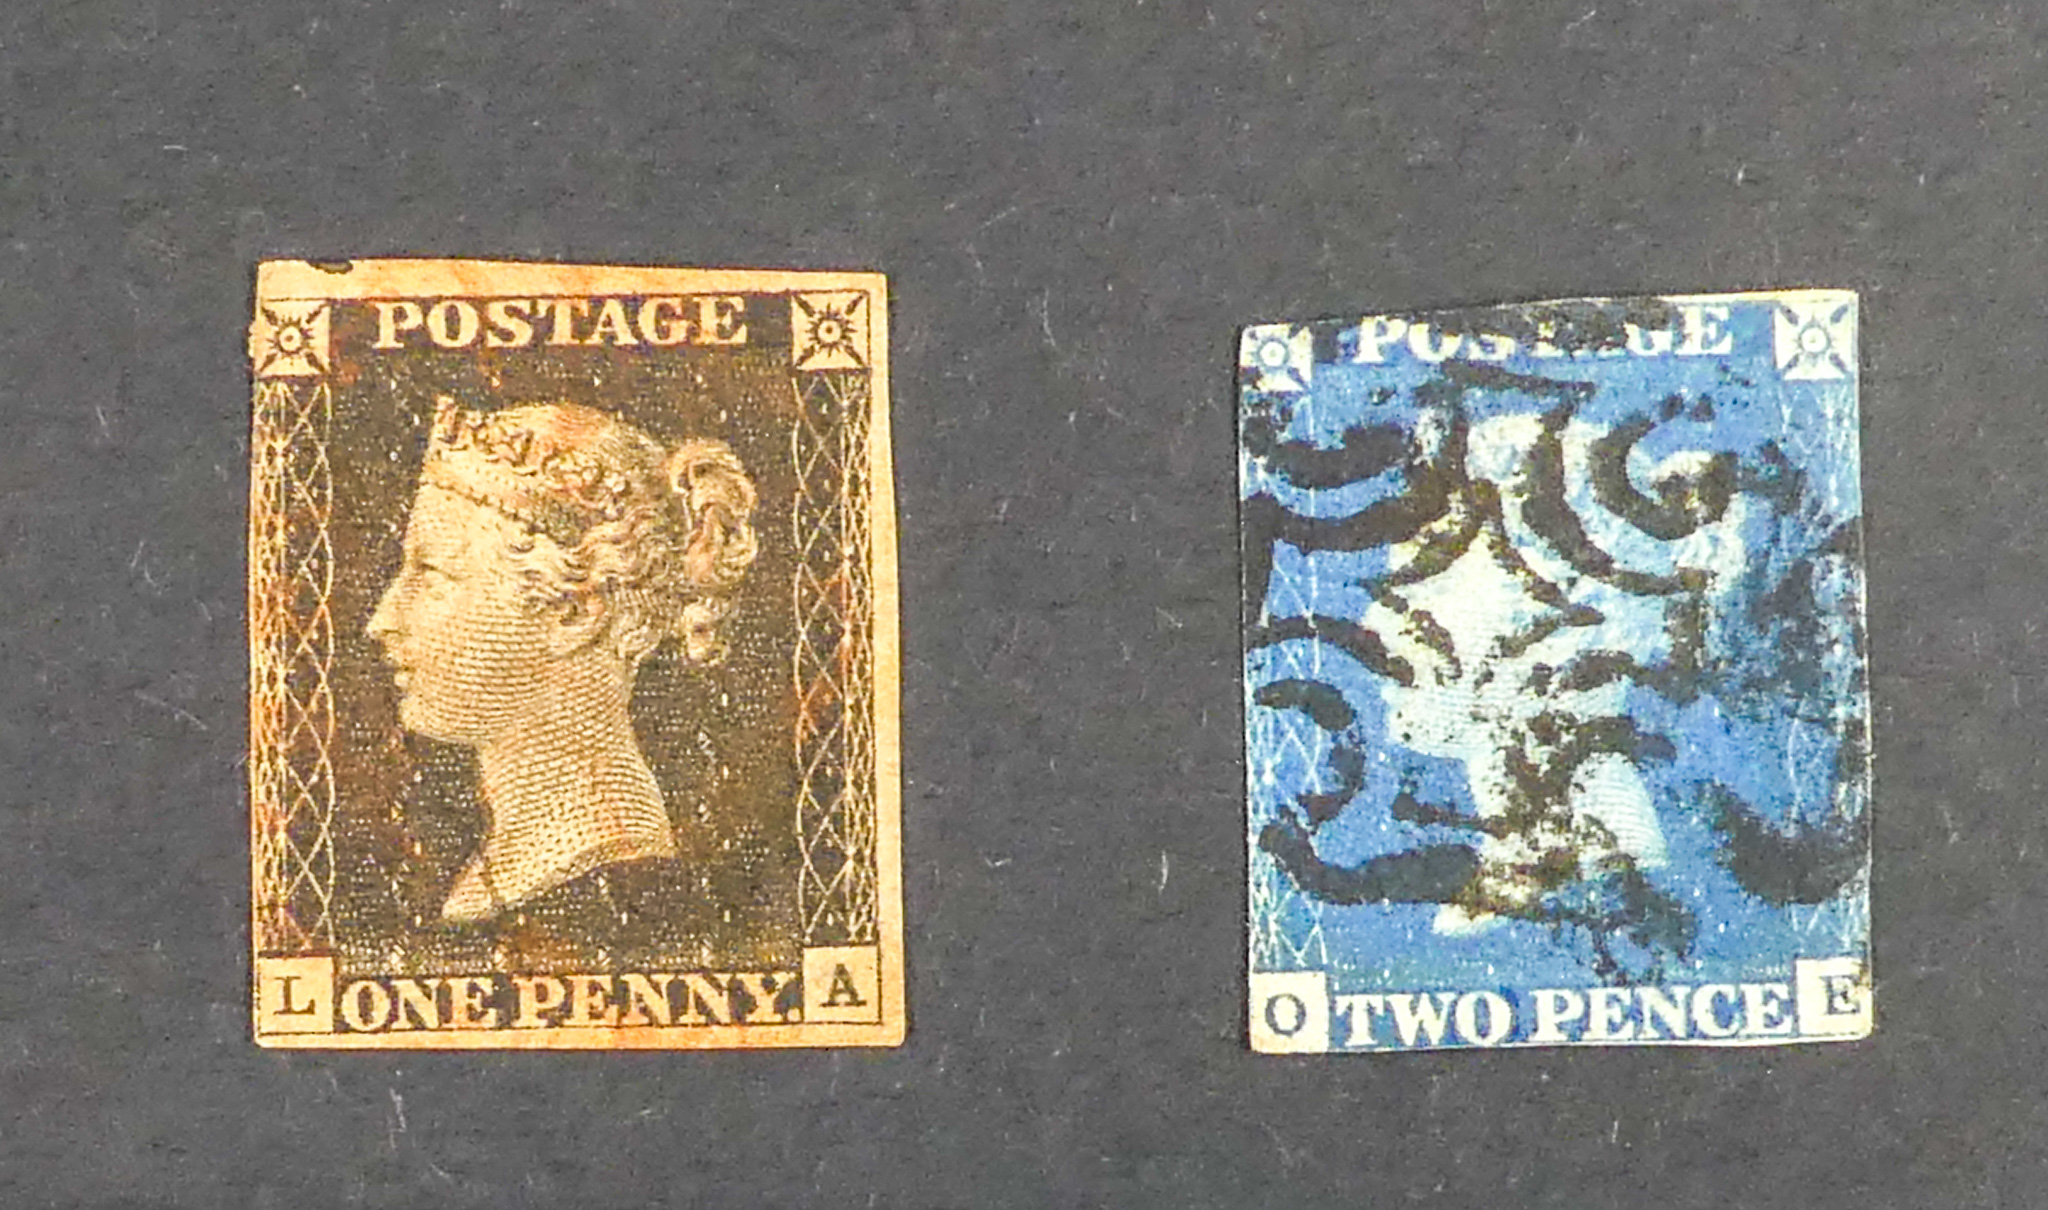 1840 PENNY BLACK AND 2D BLUE PAIR - A 3 margin 1d black plus a 2d blue (no margins).